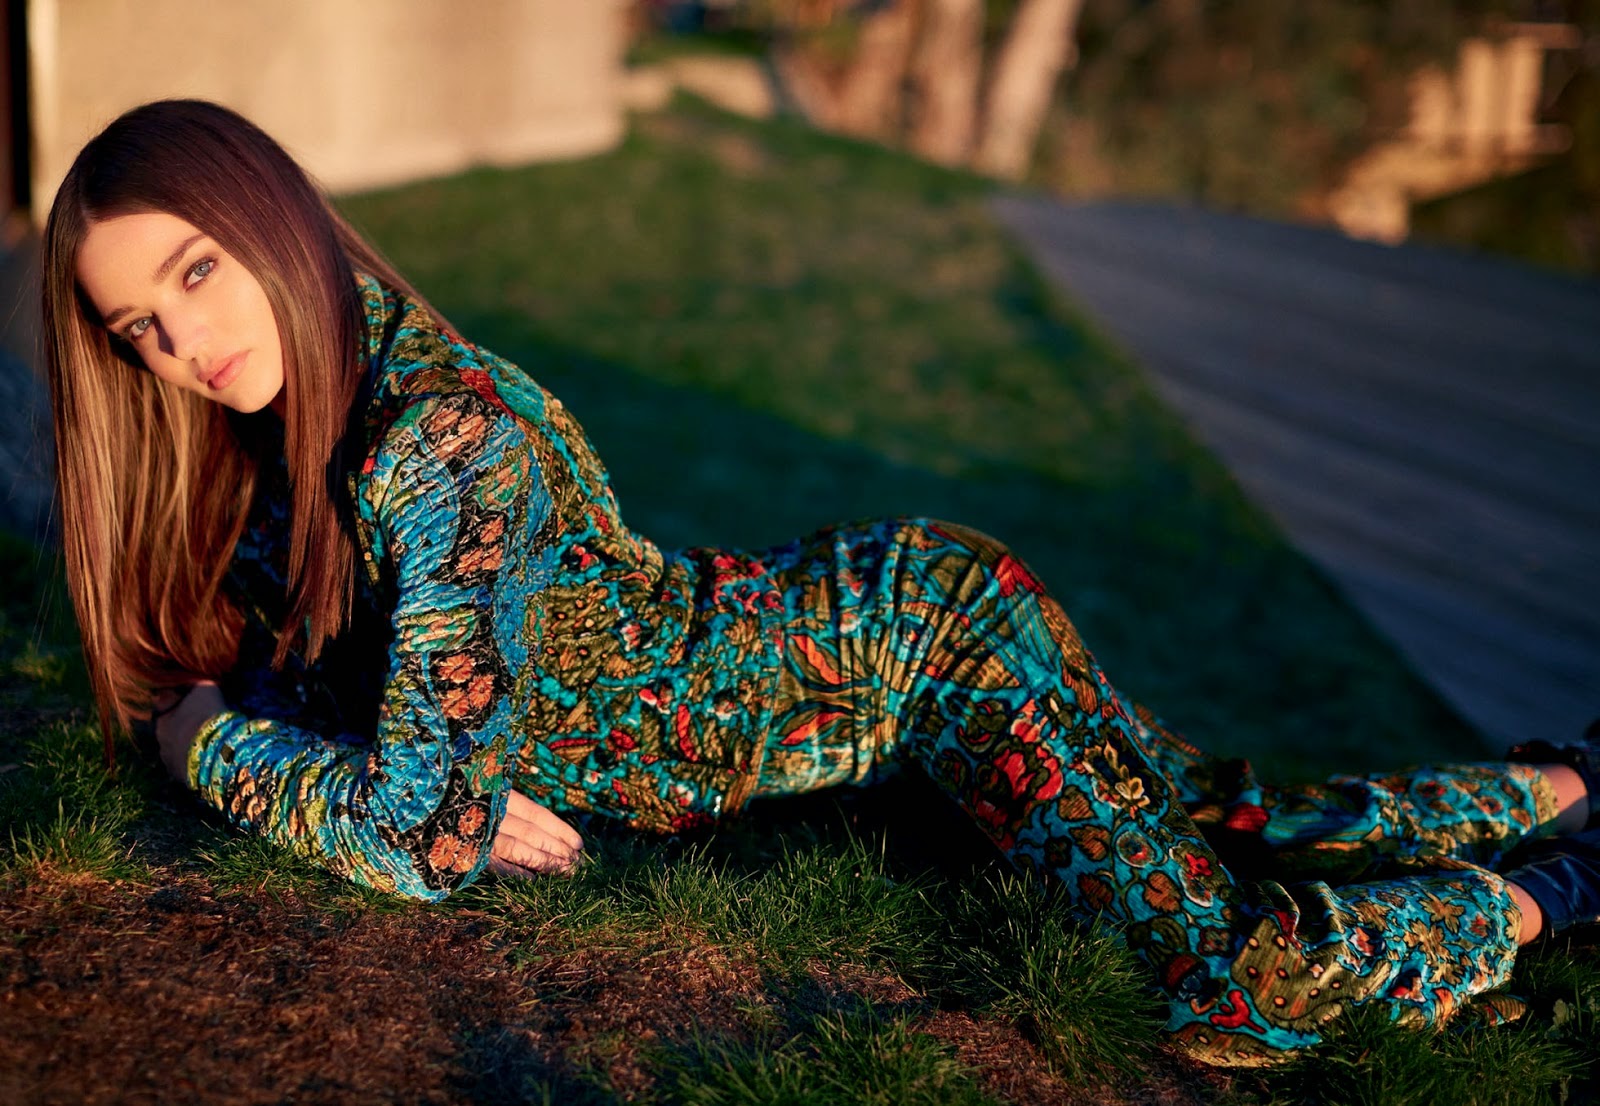 Cute Miranda Kerr For Harper Bazaar China Wallpapers